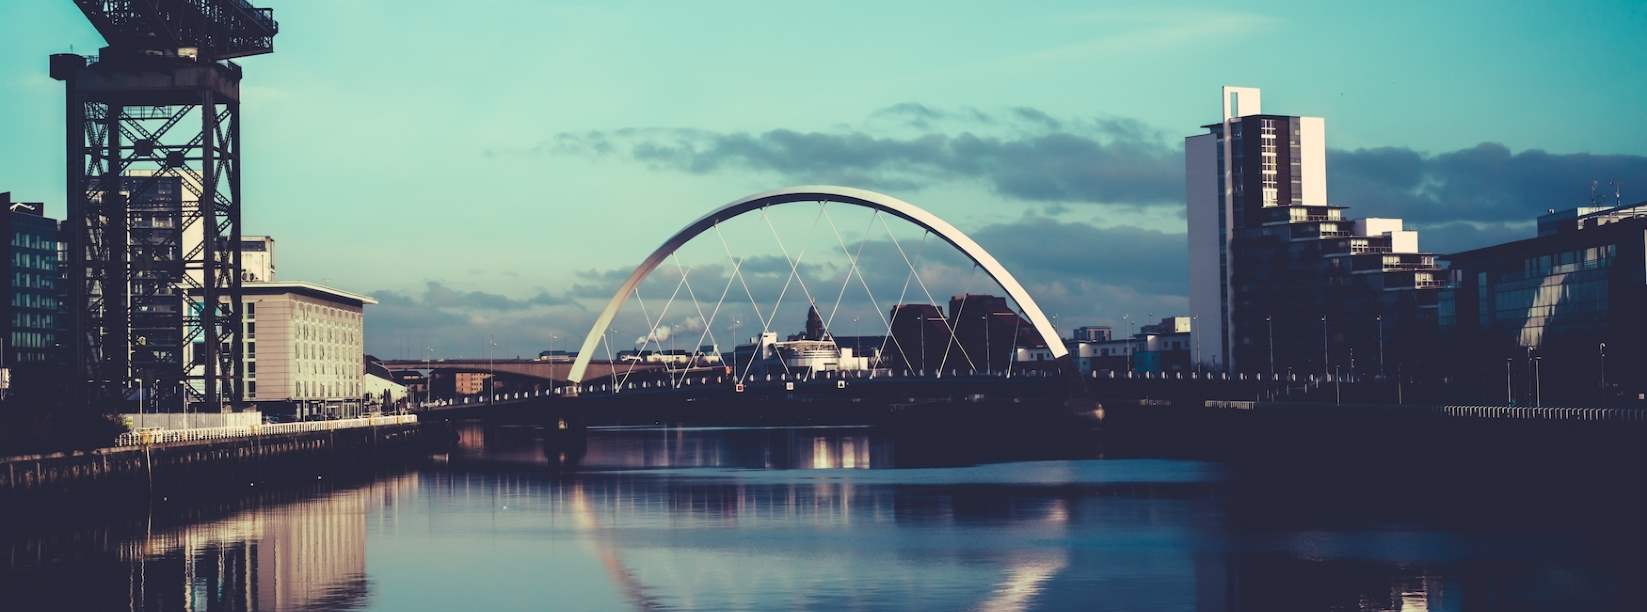 Glasgow's Clyde Arc Bridge